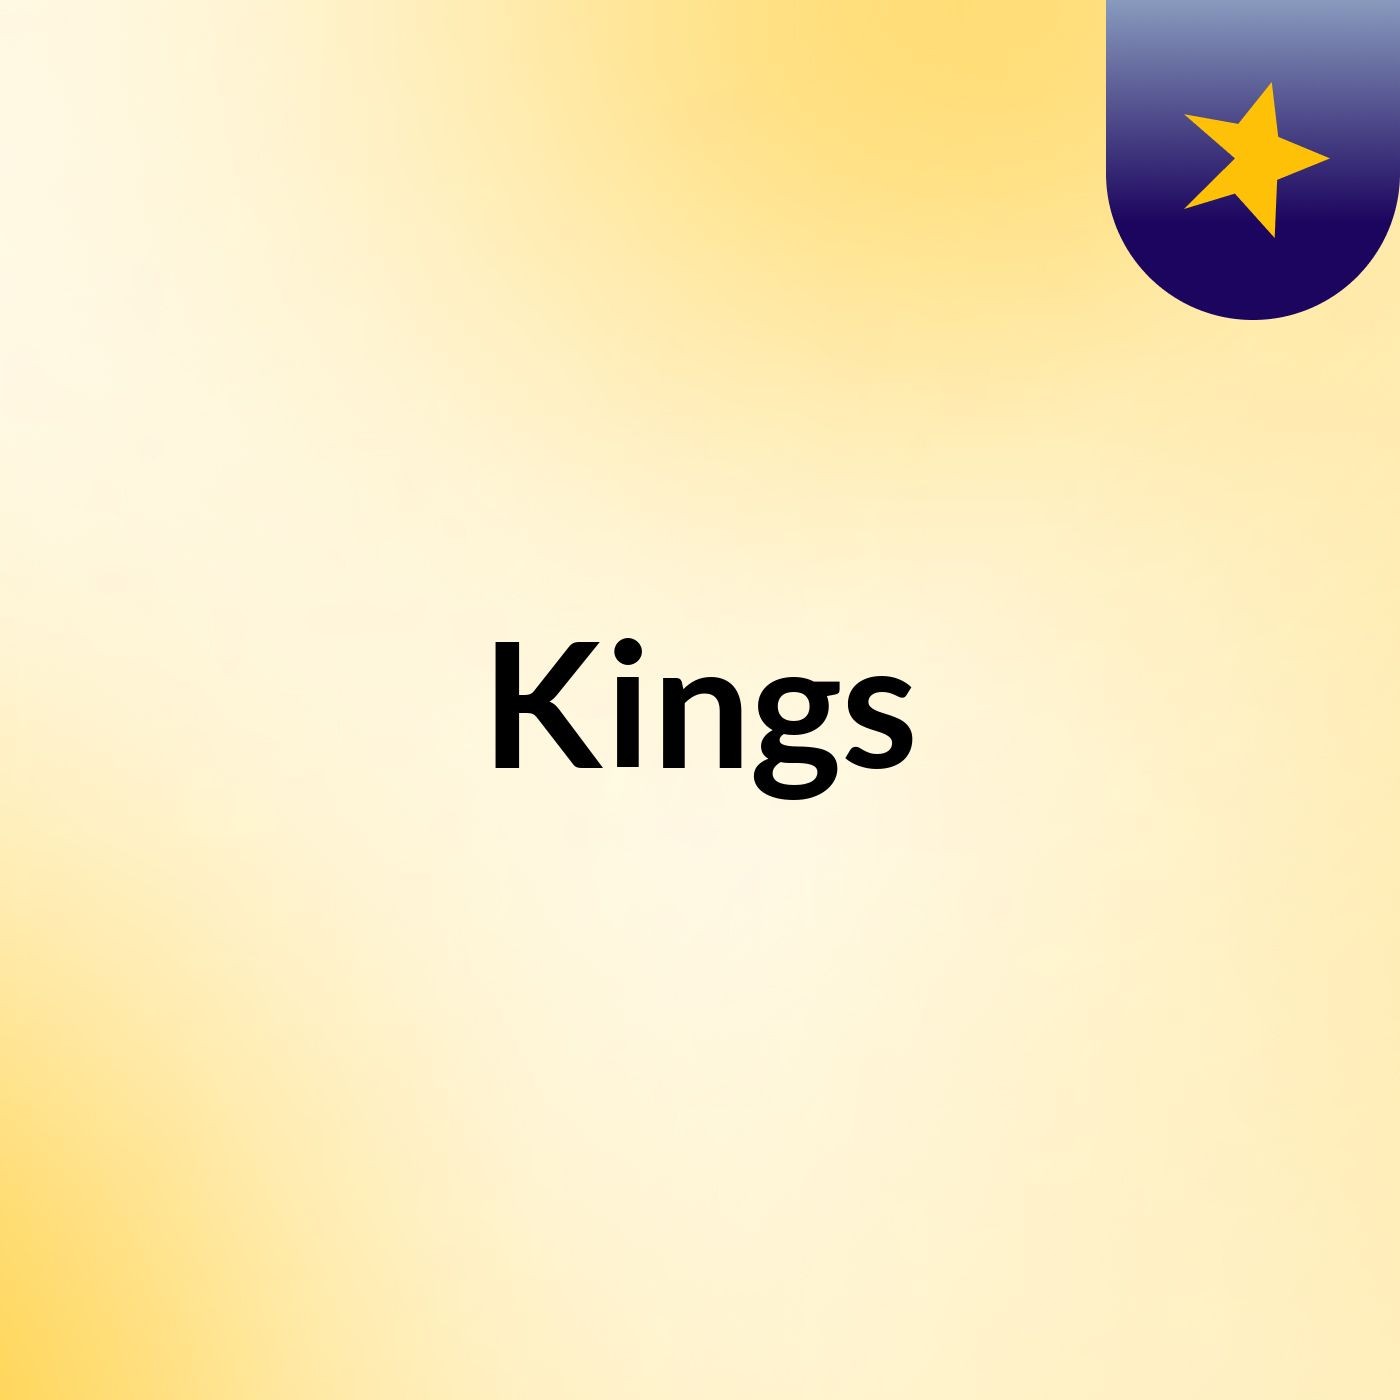 Episode 2 - Kings